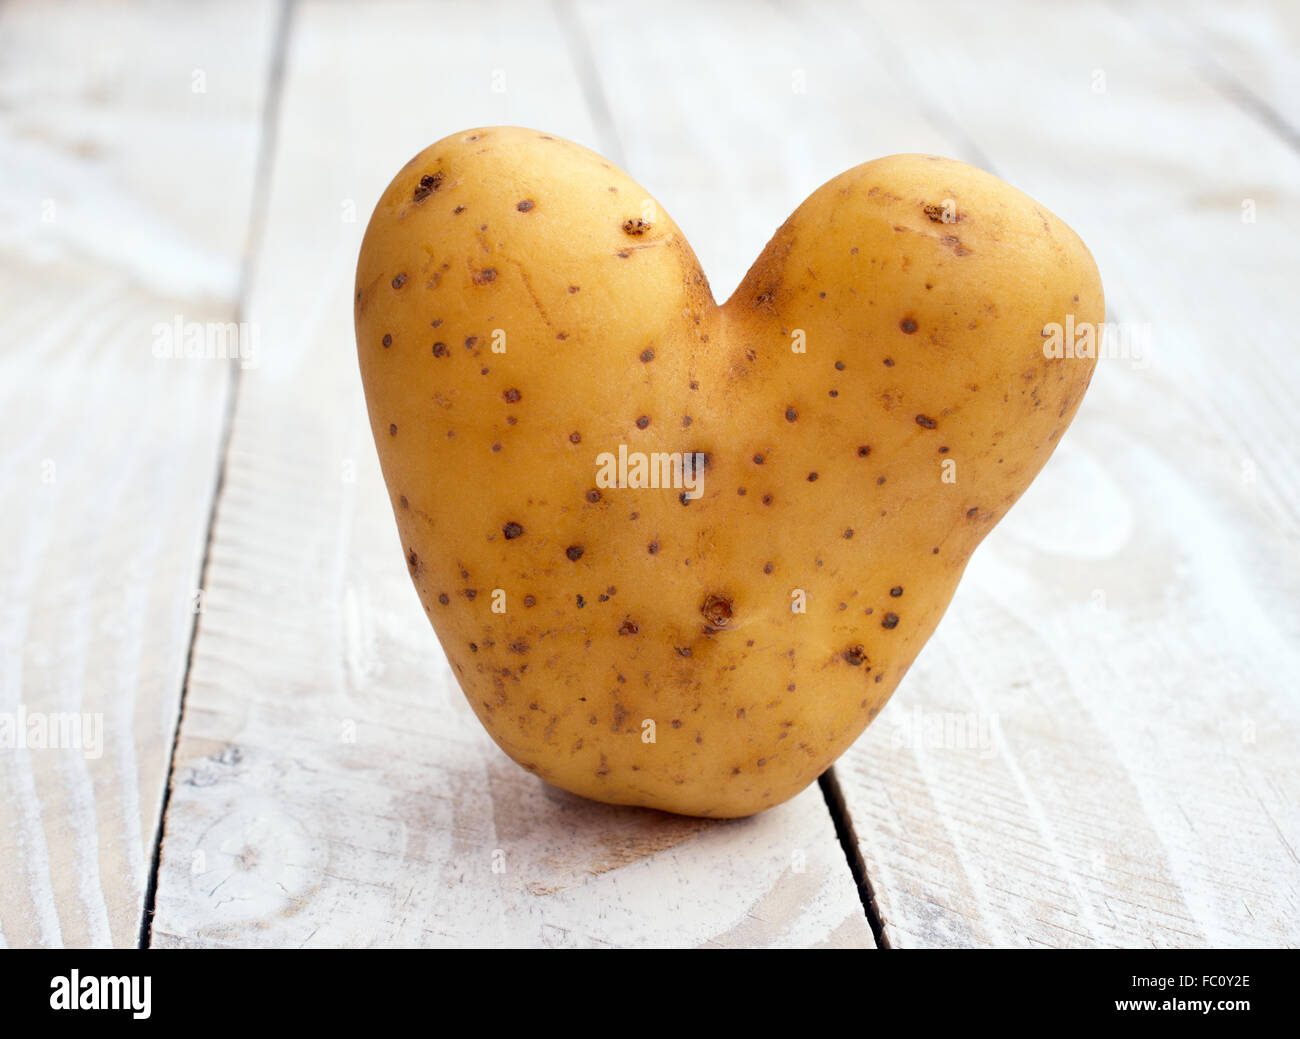 Heart shaped potatoe stock photo. Image of like, food - 14557822